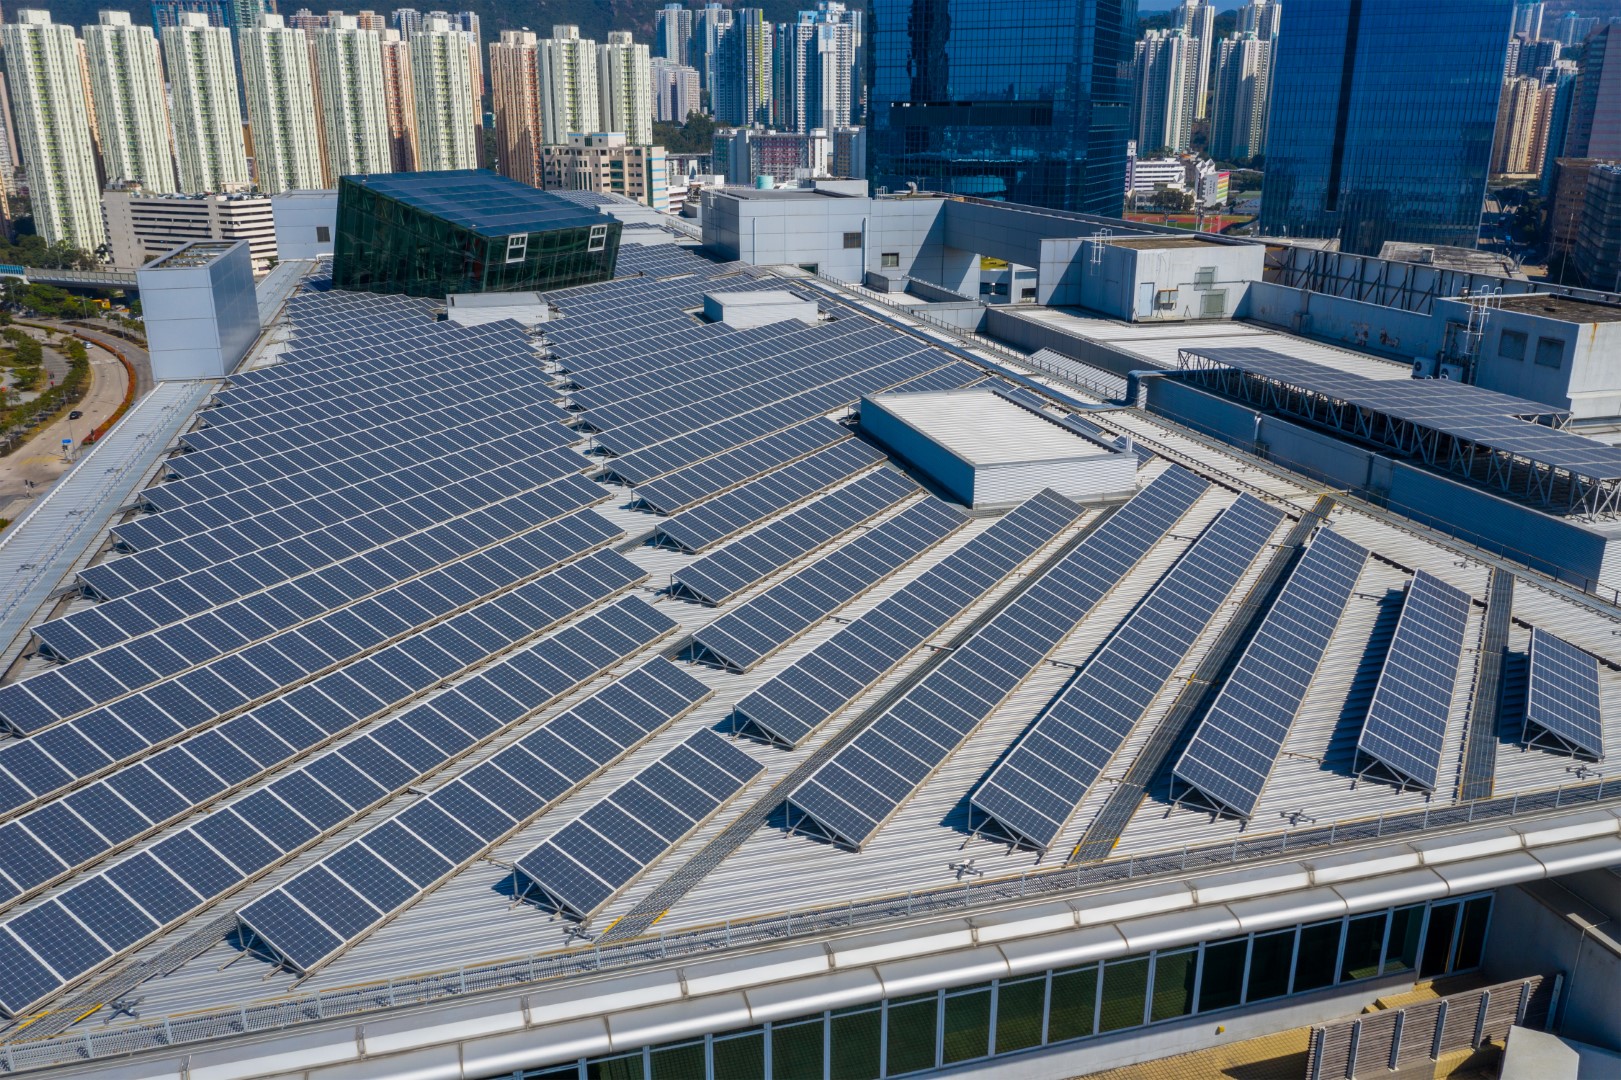 Solar Panel On Roof Top Building 2022 10 18 00 32 18 Utc